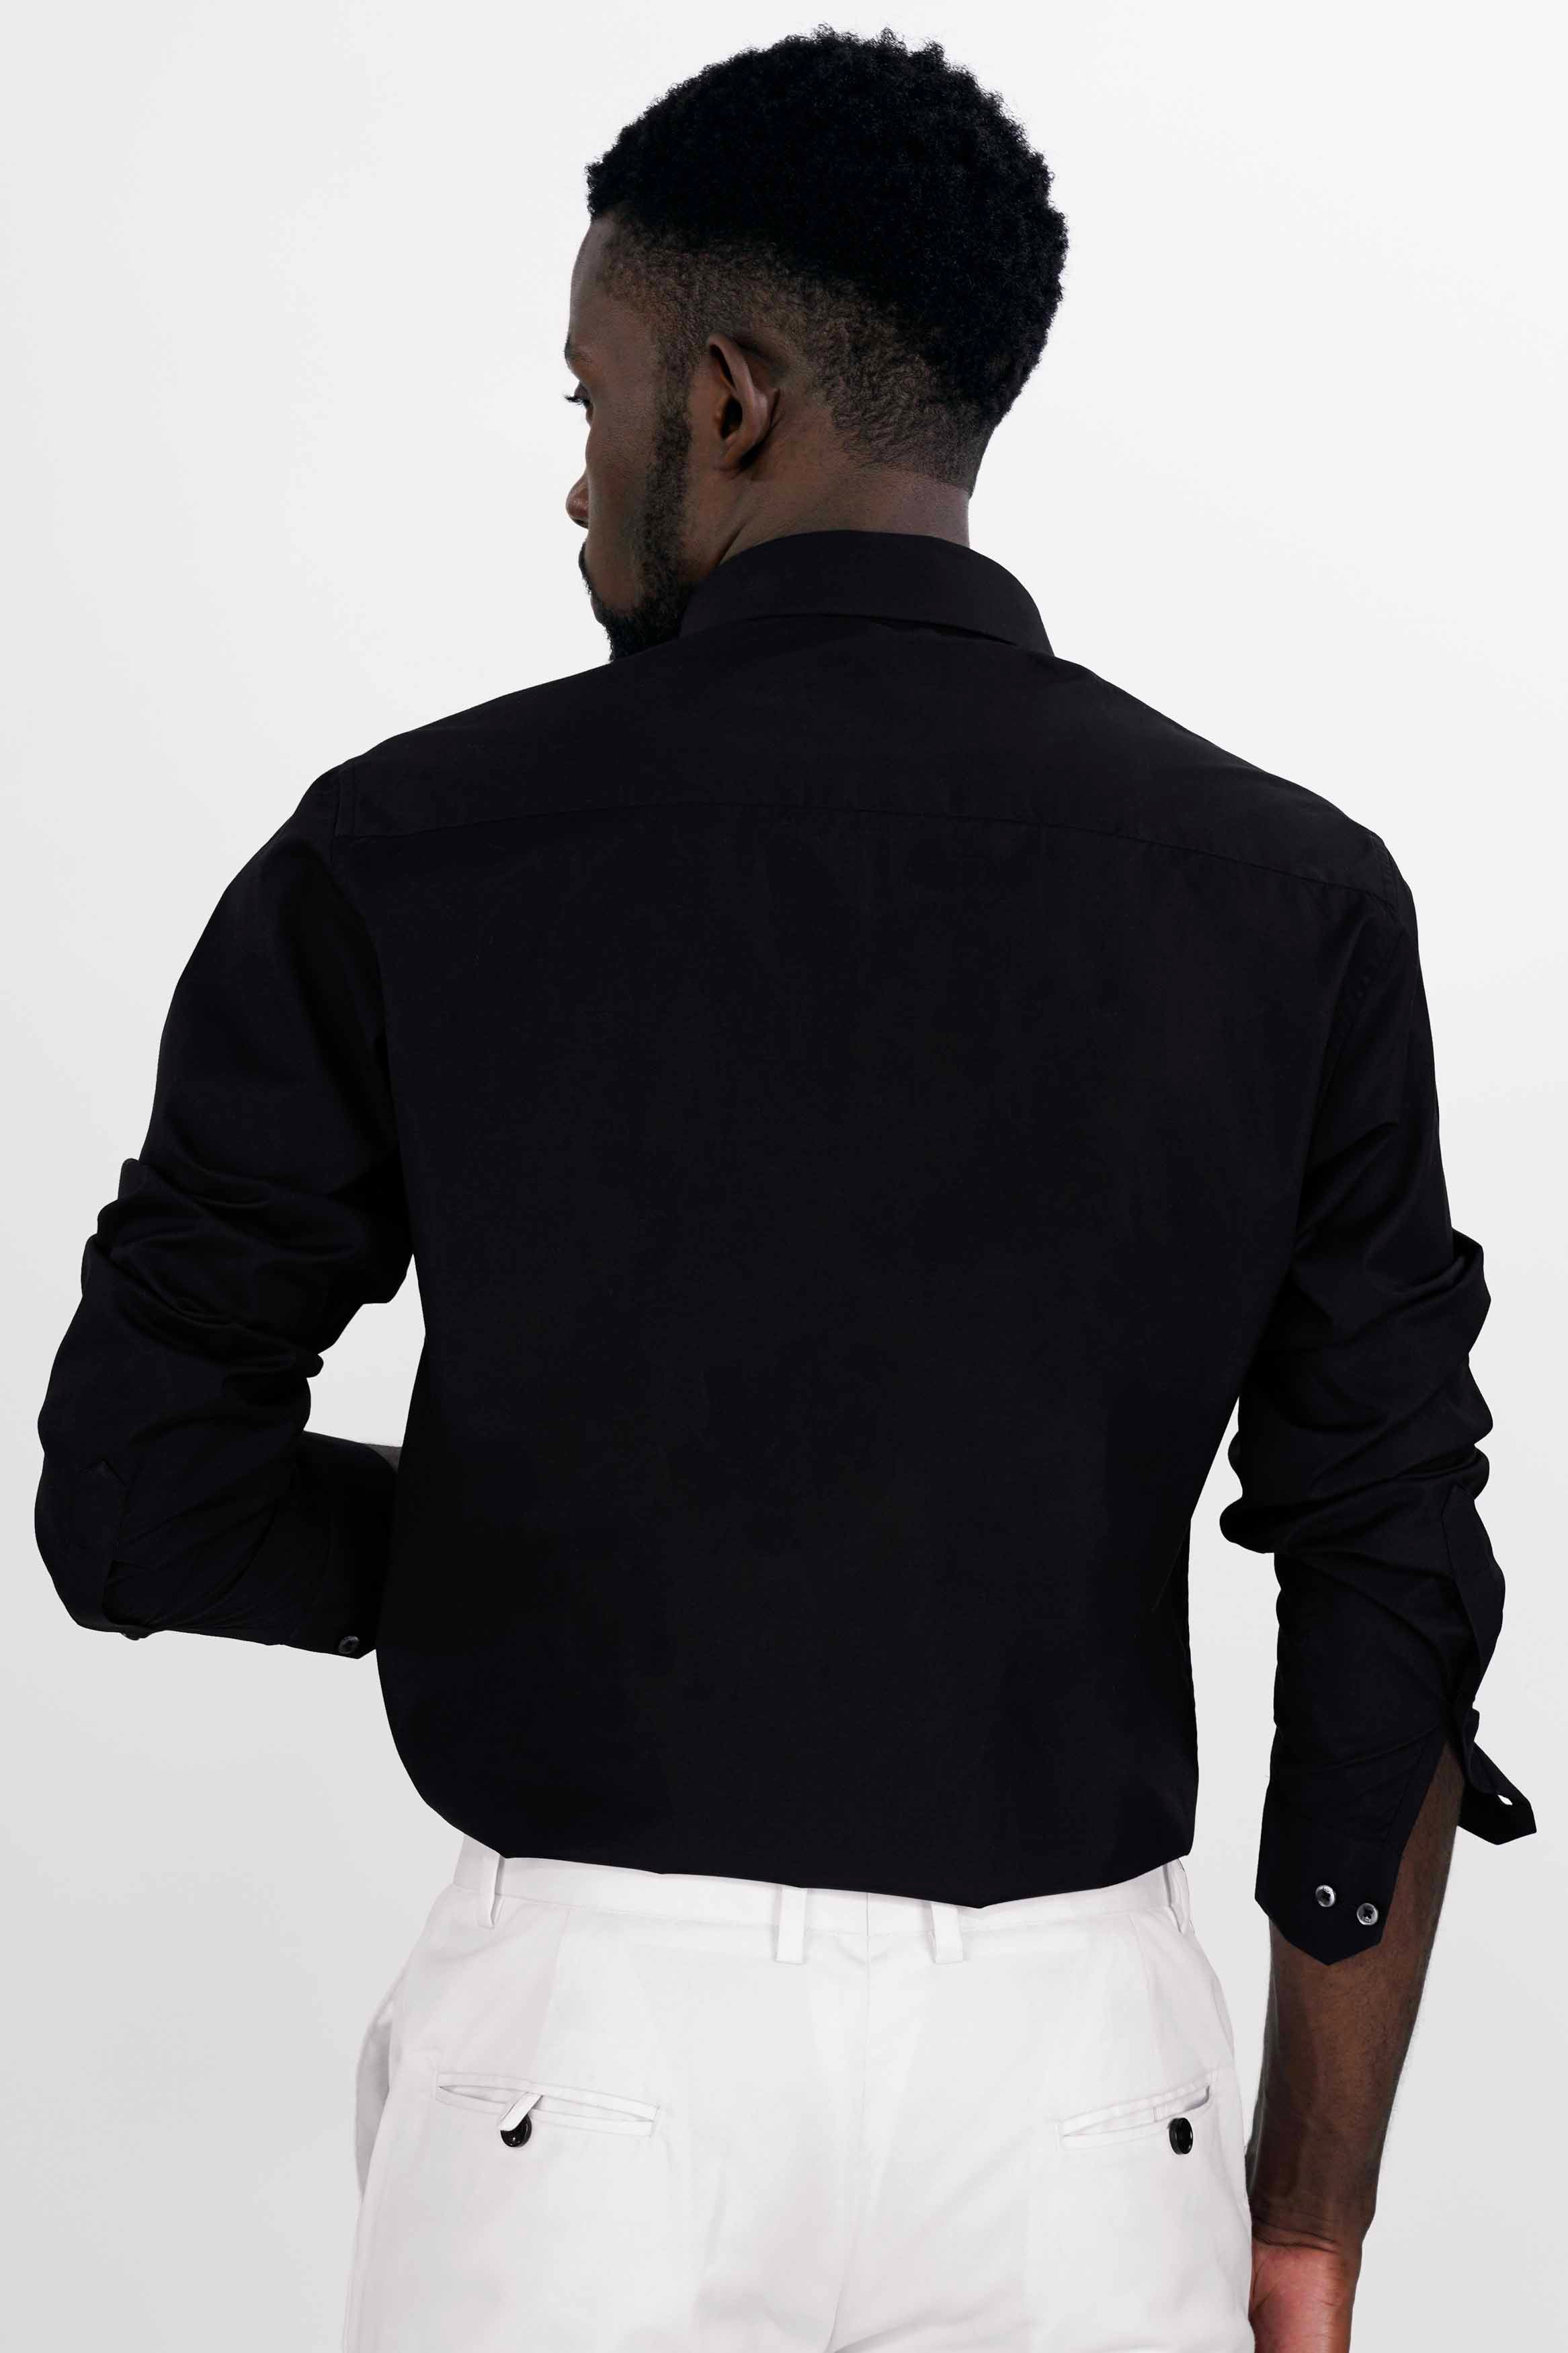 Jade Black Handcrafted Embroidered Super Soft Premium Cotton Designer Shirt